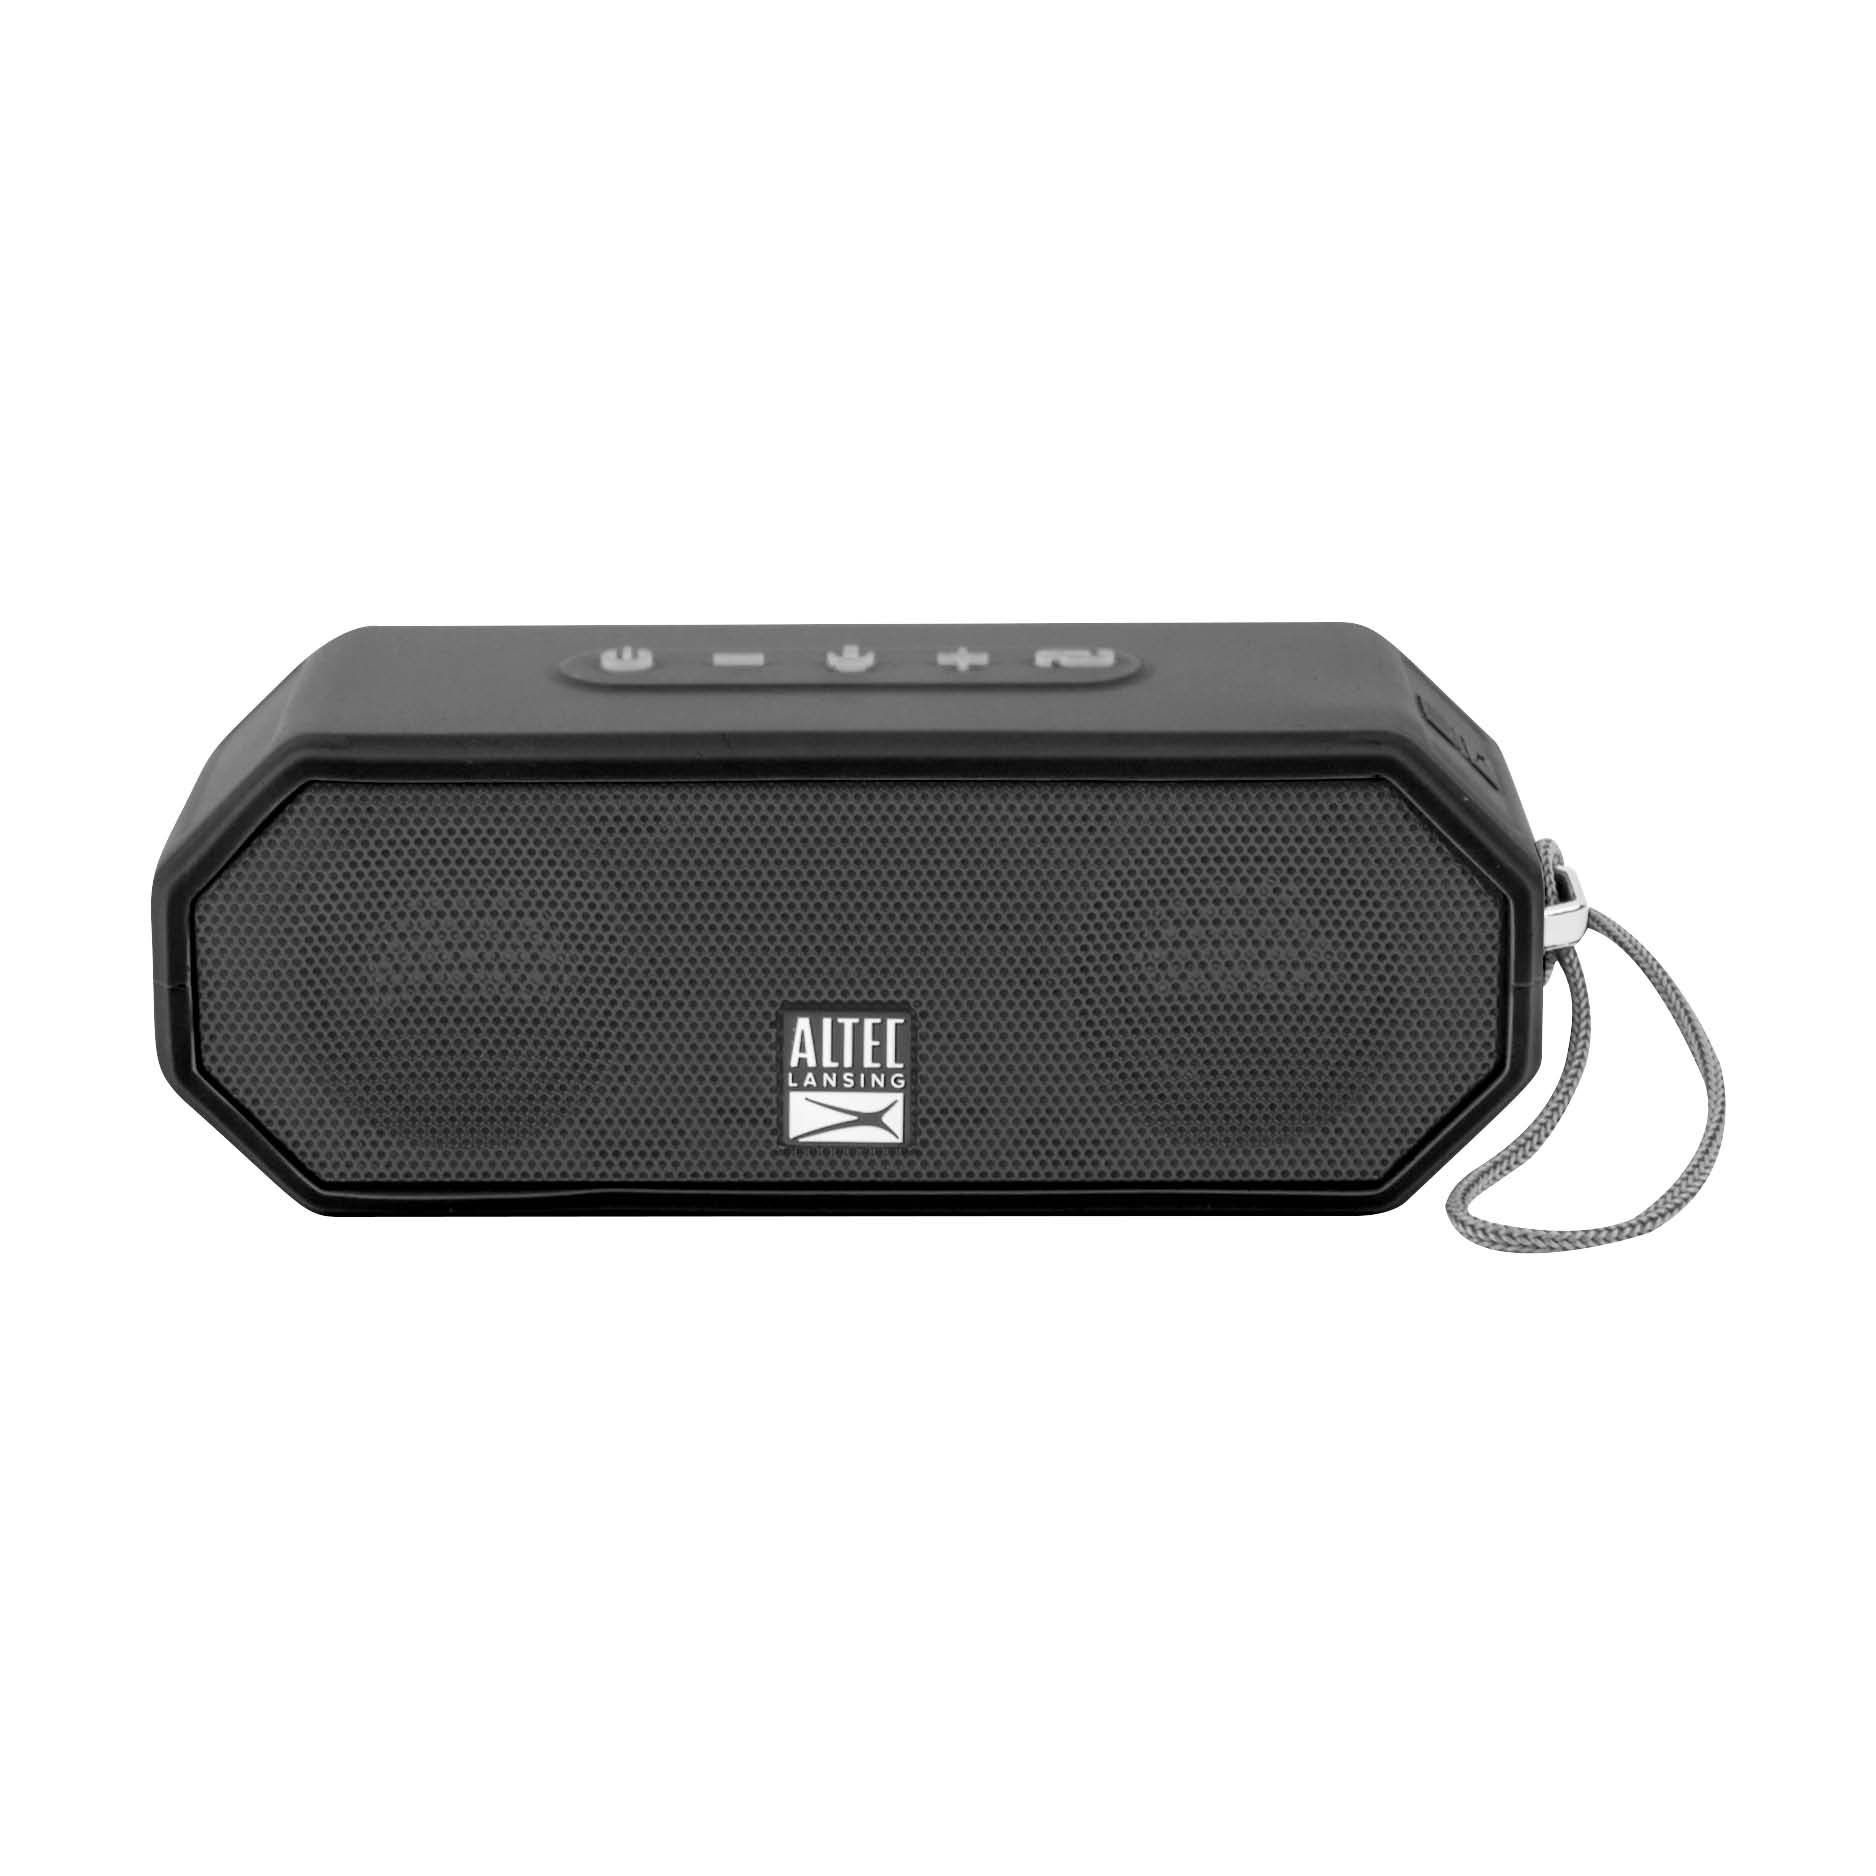 Altec Lansing Jacket H20 4 Portable Bluetooth Speaker - Black - image 8 of 14